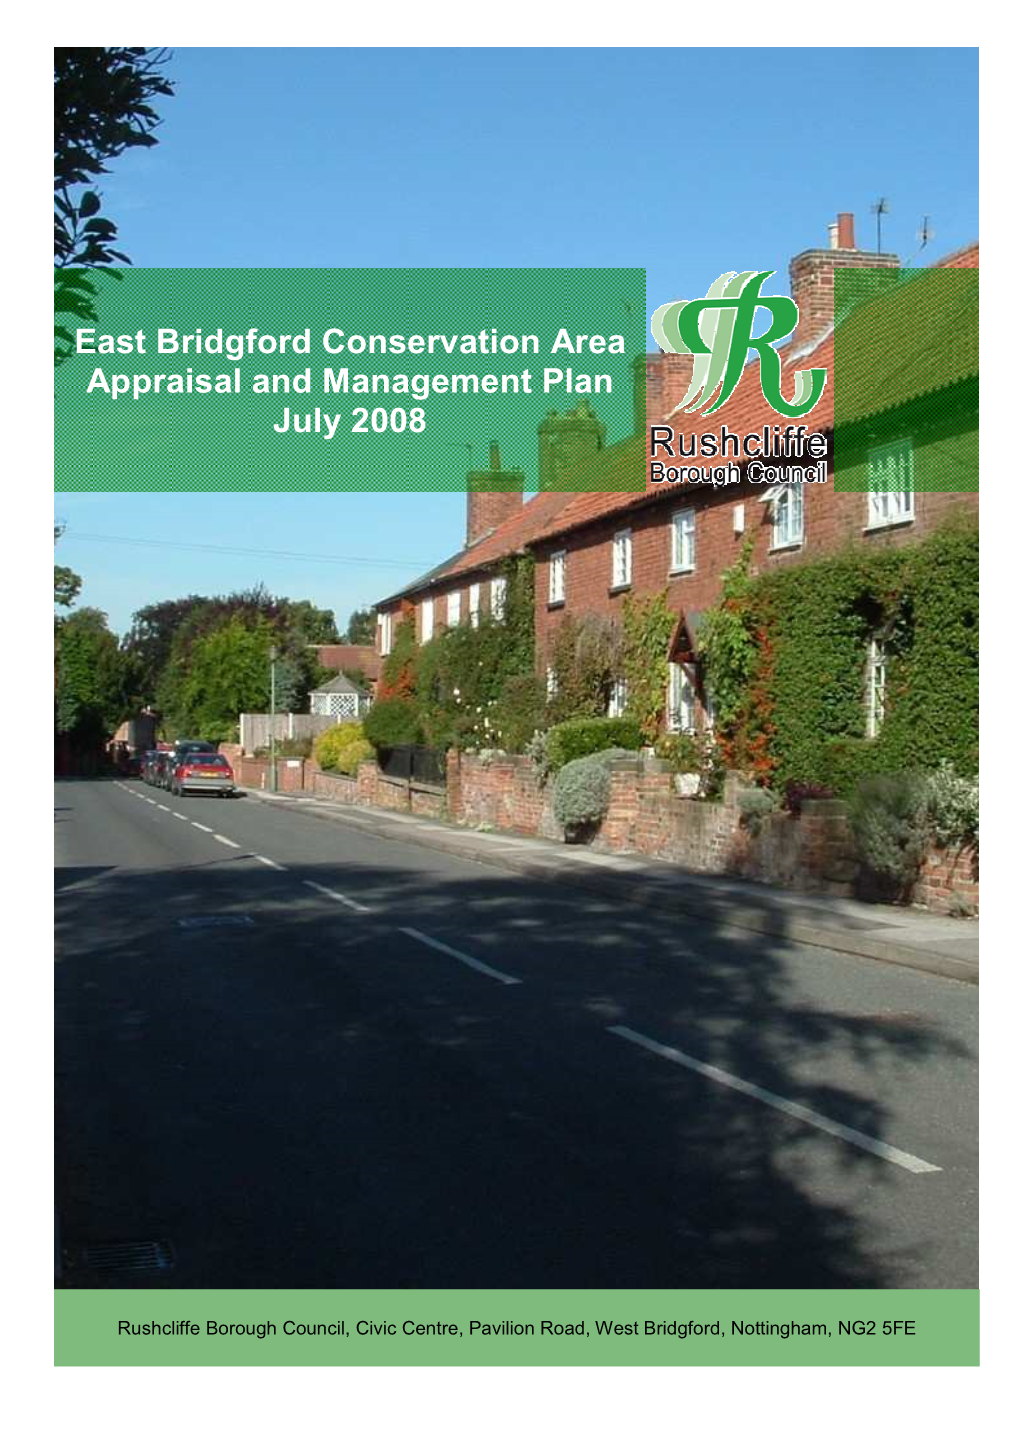 East Bridgford Appraisal and Management Plan